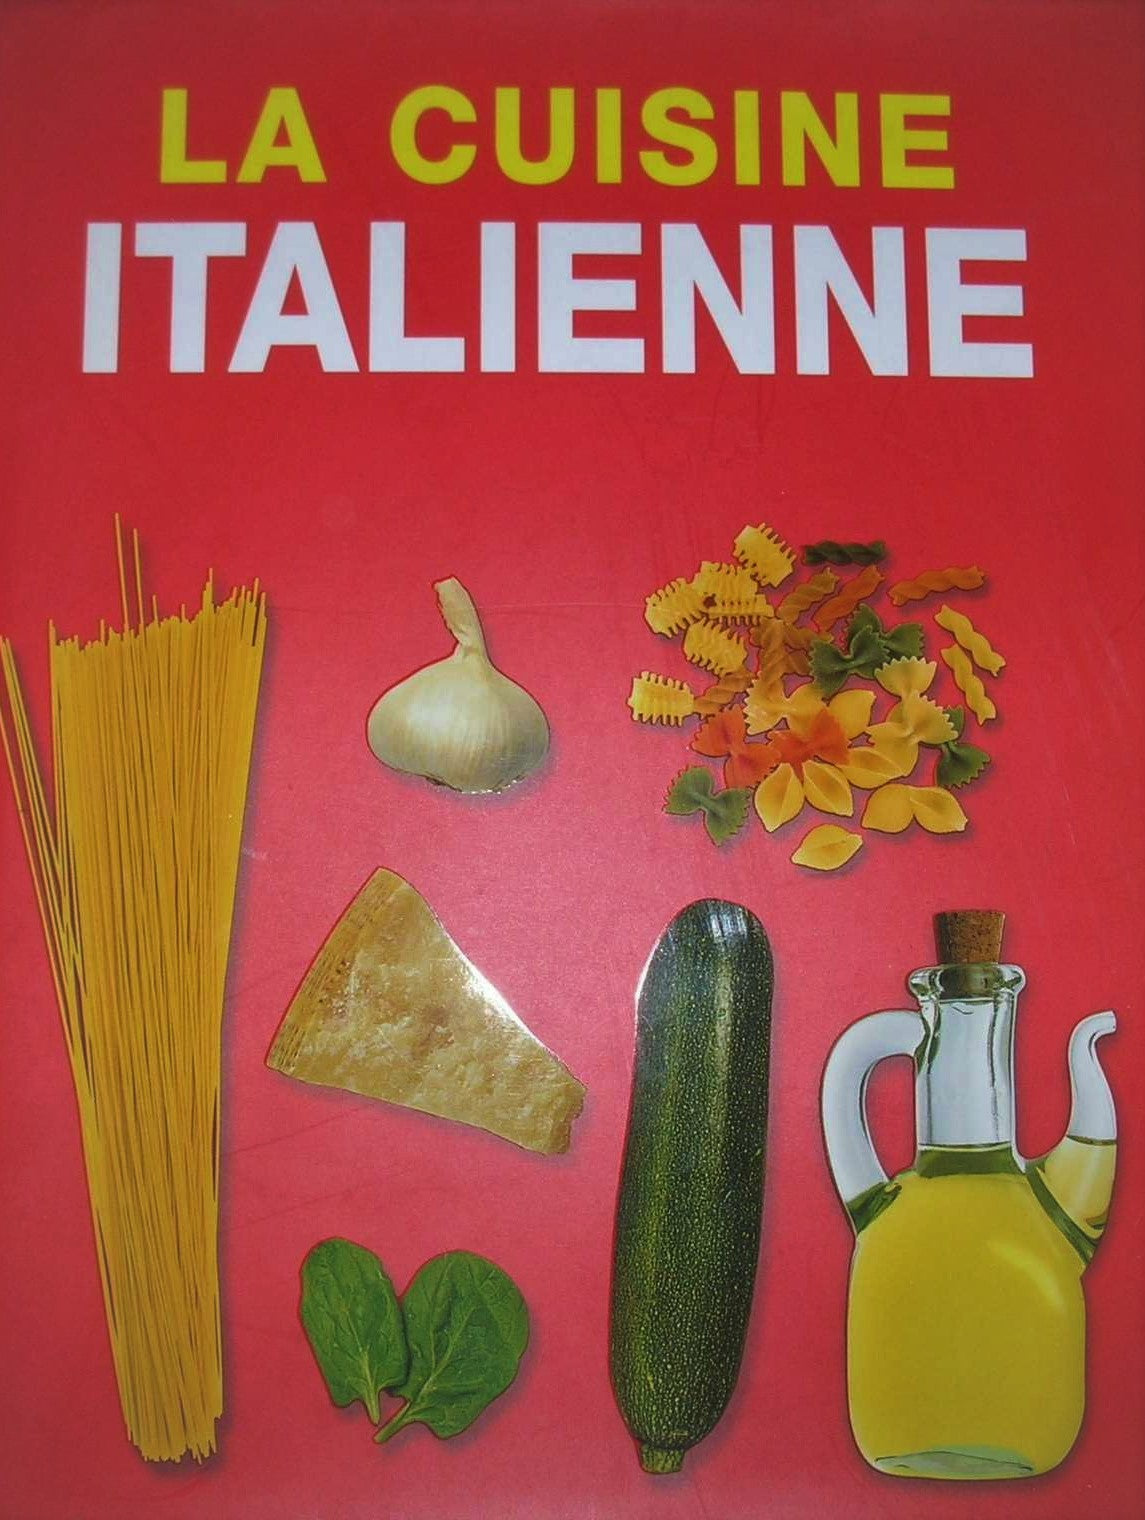 La cuisine italienne